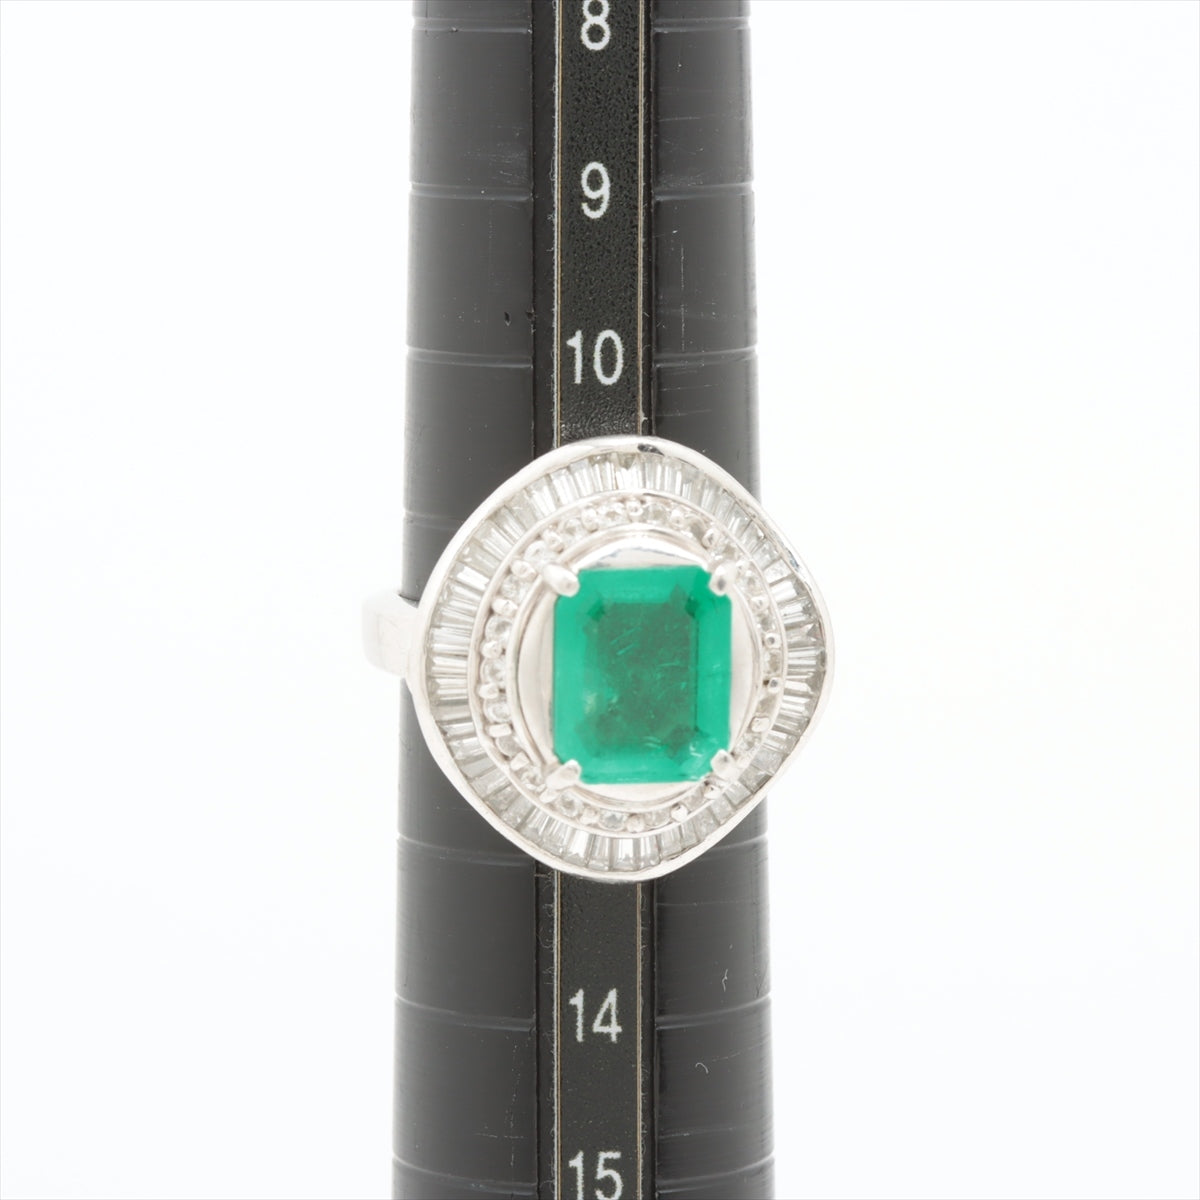 Emerald Diamond Ring Pt900 13.8g 260 1.39 N